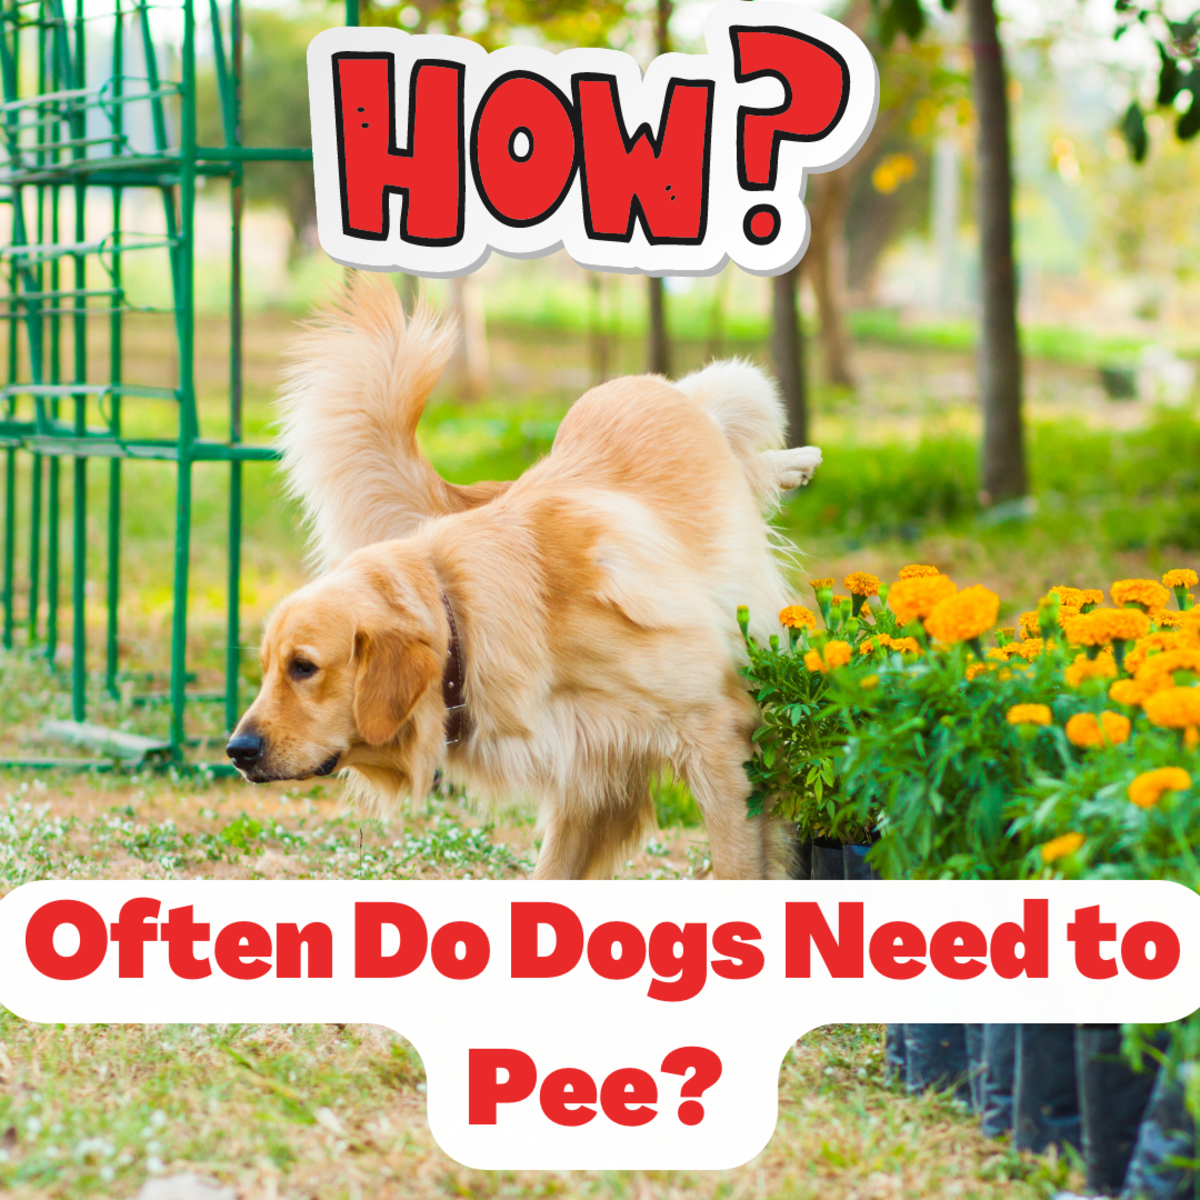 Often Do Dogs Need to Pee